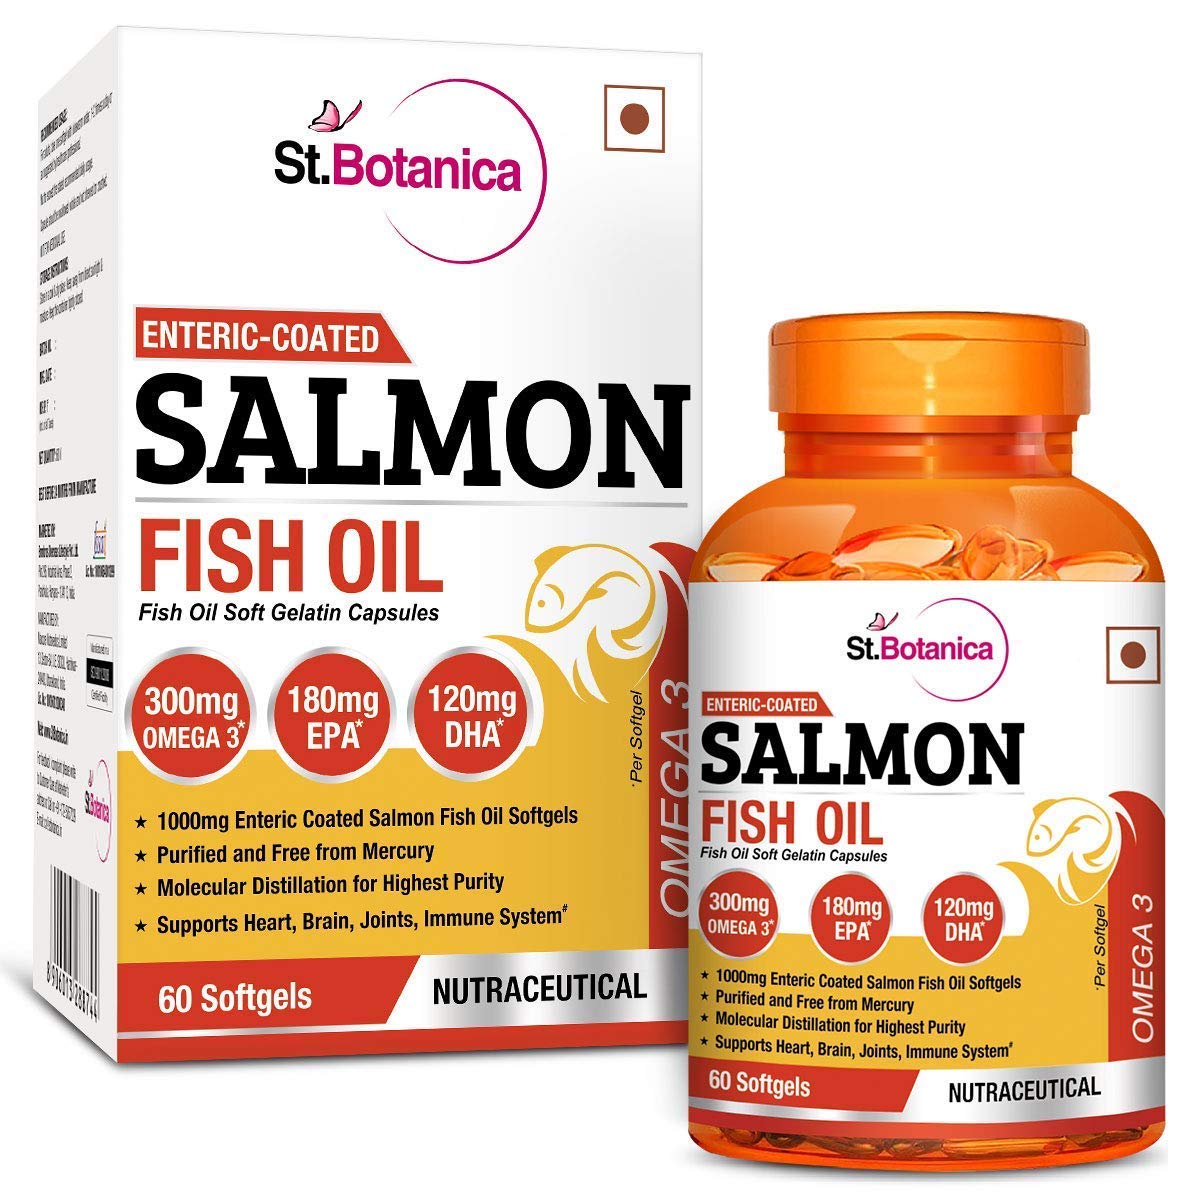 StBotanica Salmon Fish Oil Omega-3 1000mg-CLASSIBLOGGER